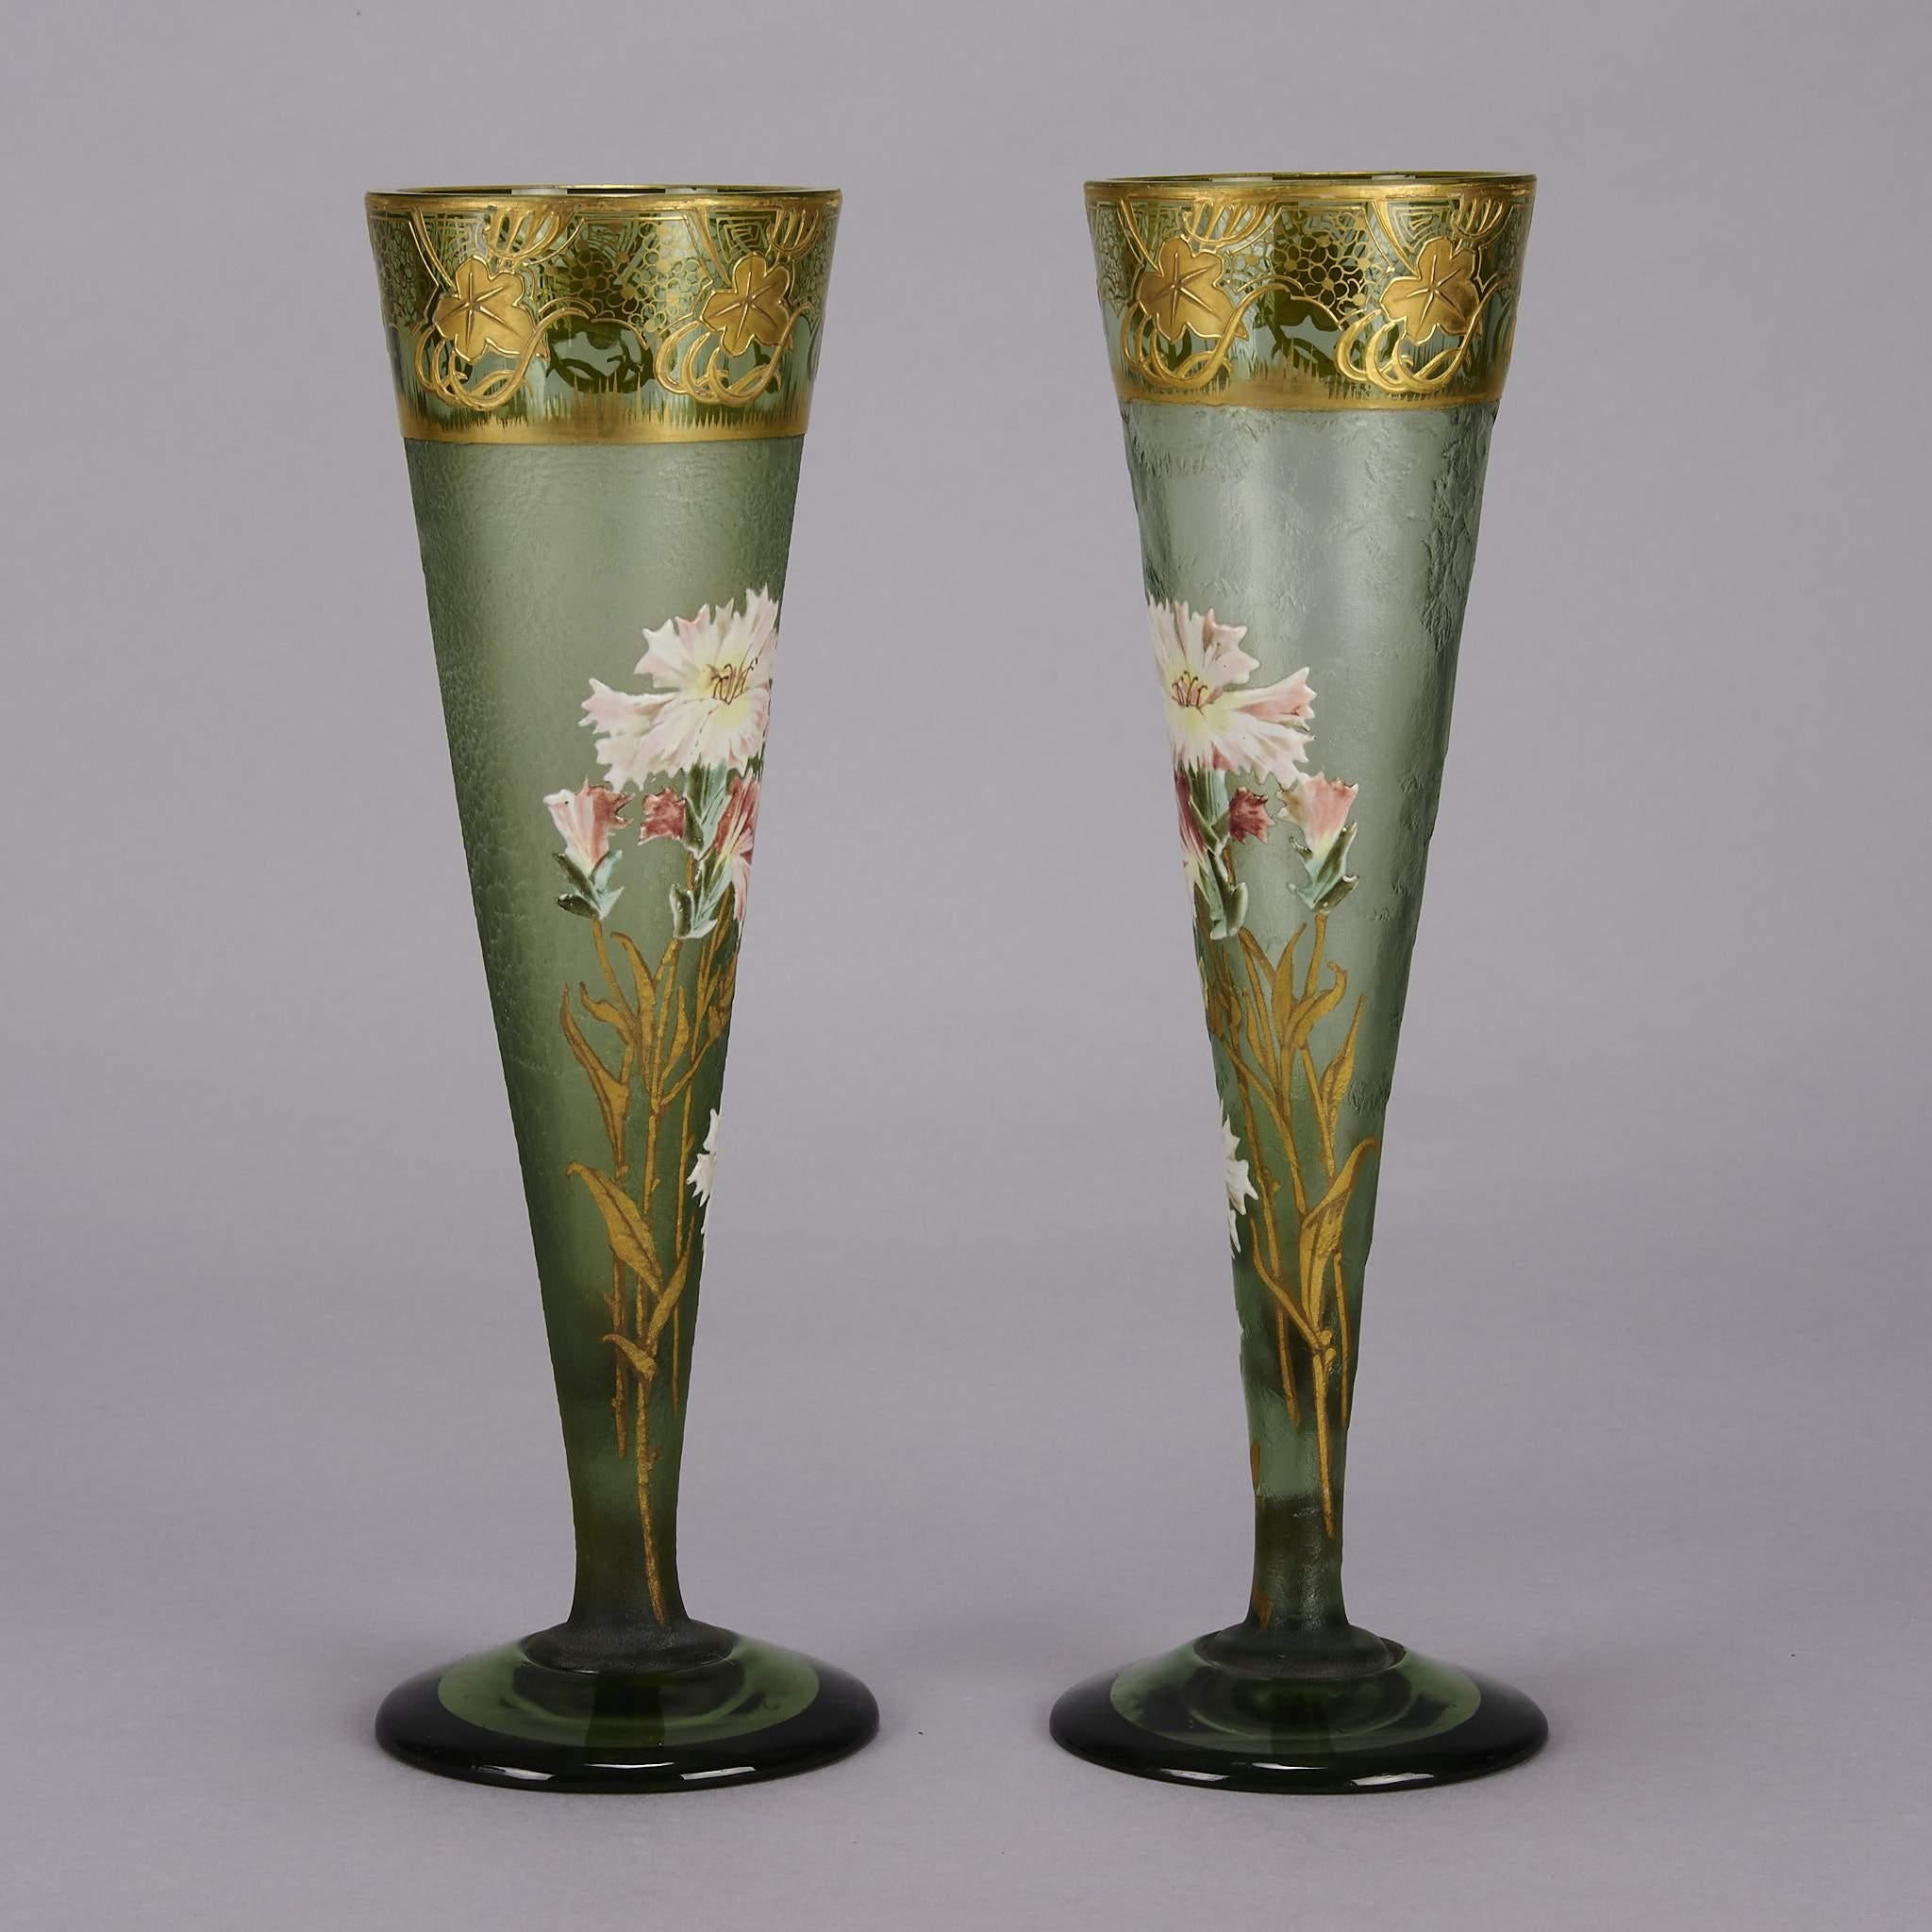 European “Flower Vases” Art Nouveau Glass by Mont Joye, circa 1900